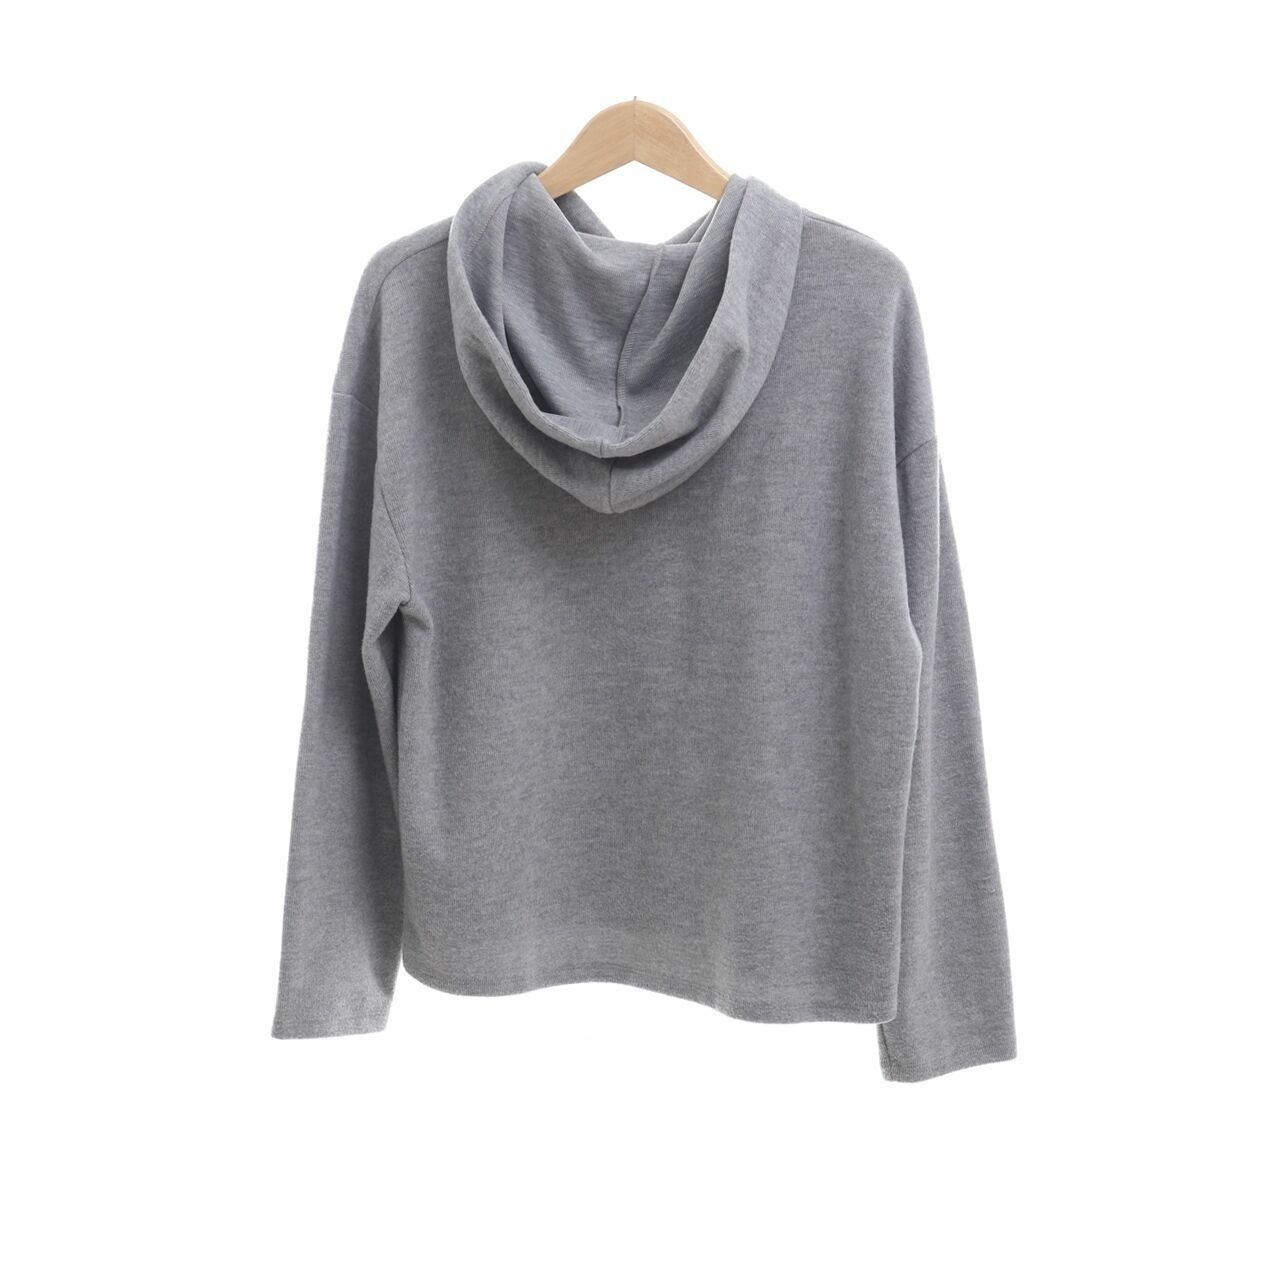 Zara Grey Hoodie Sweater